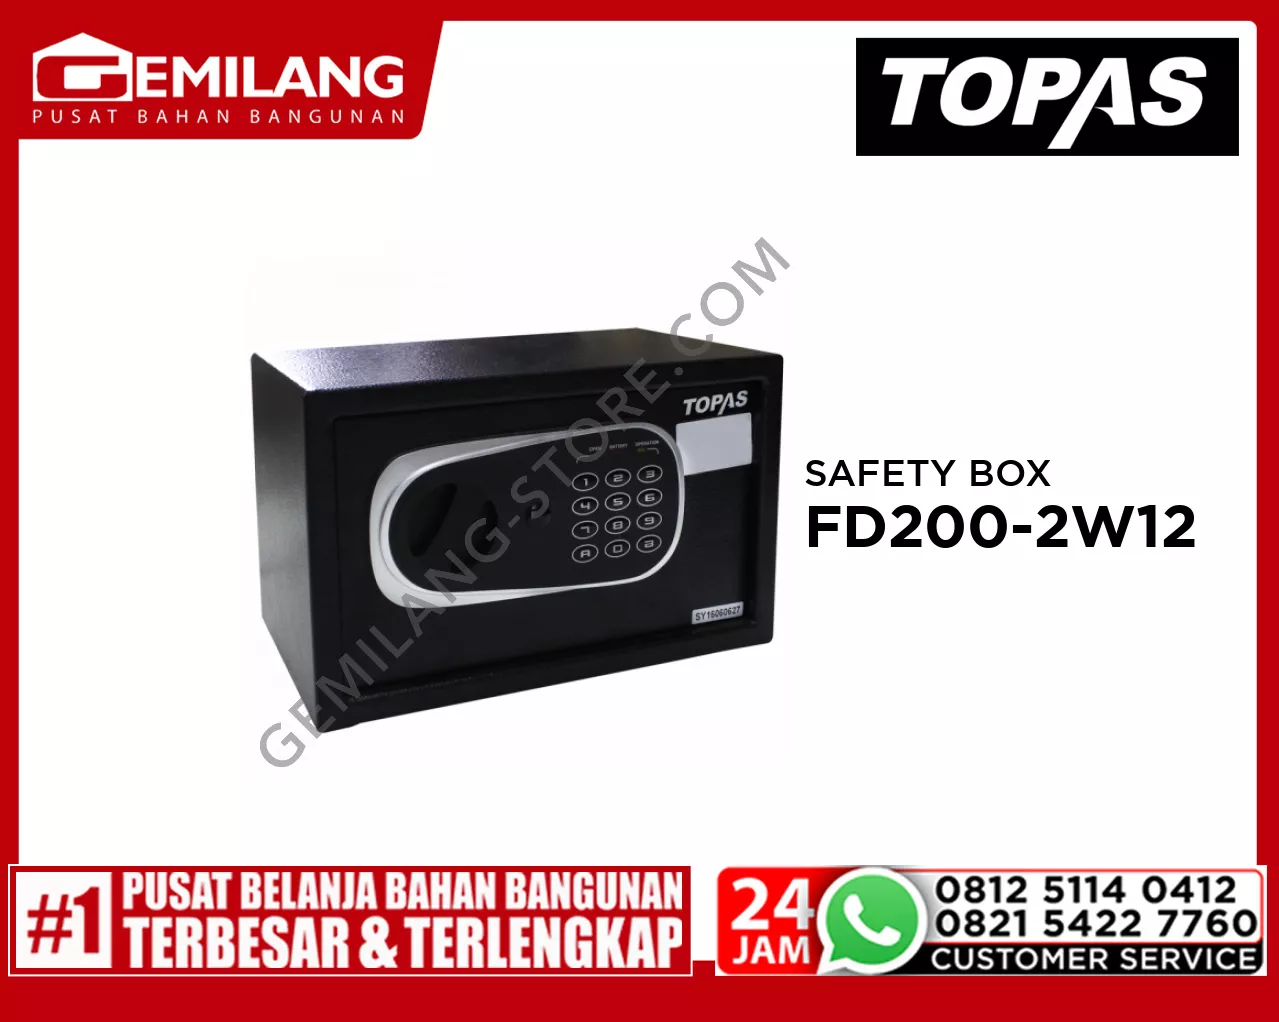 TOPAS SAFETY BOX FD200-2W12